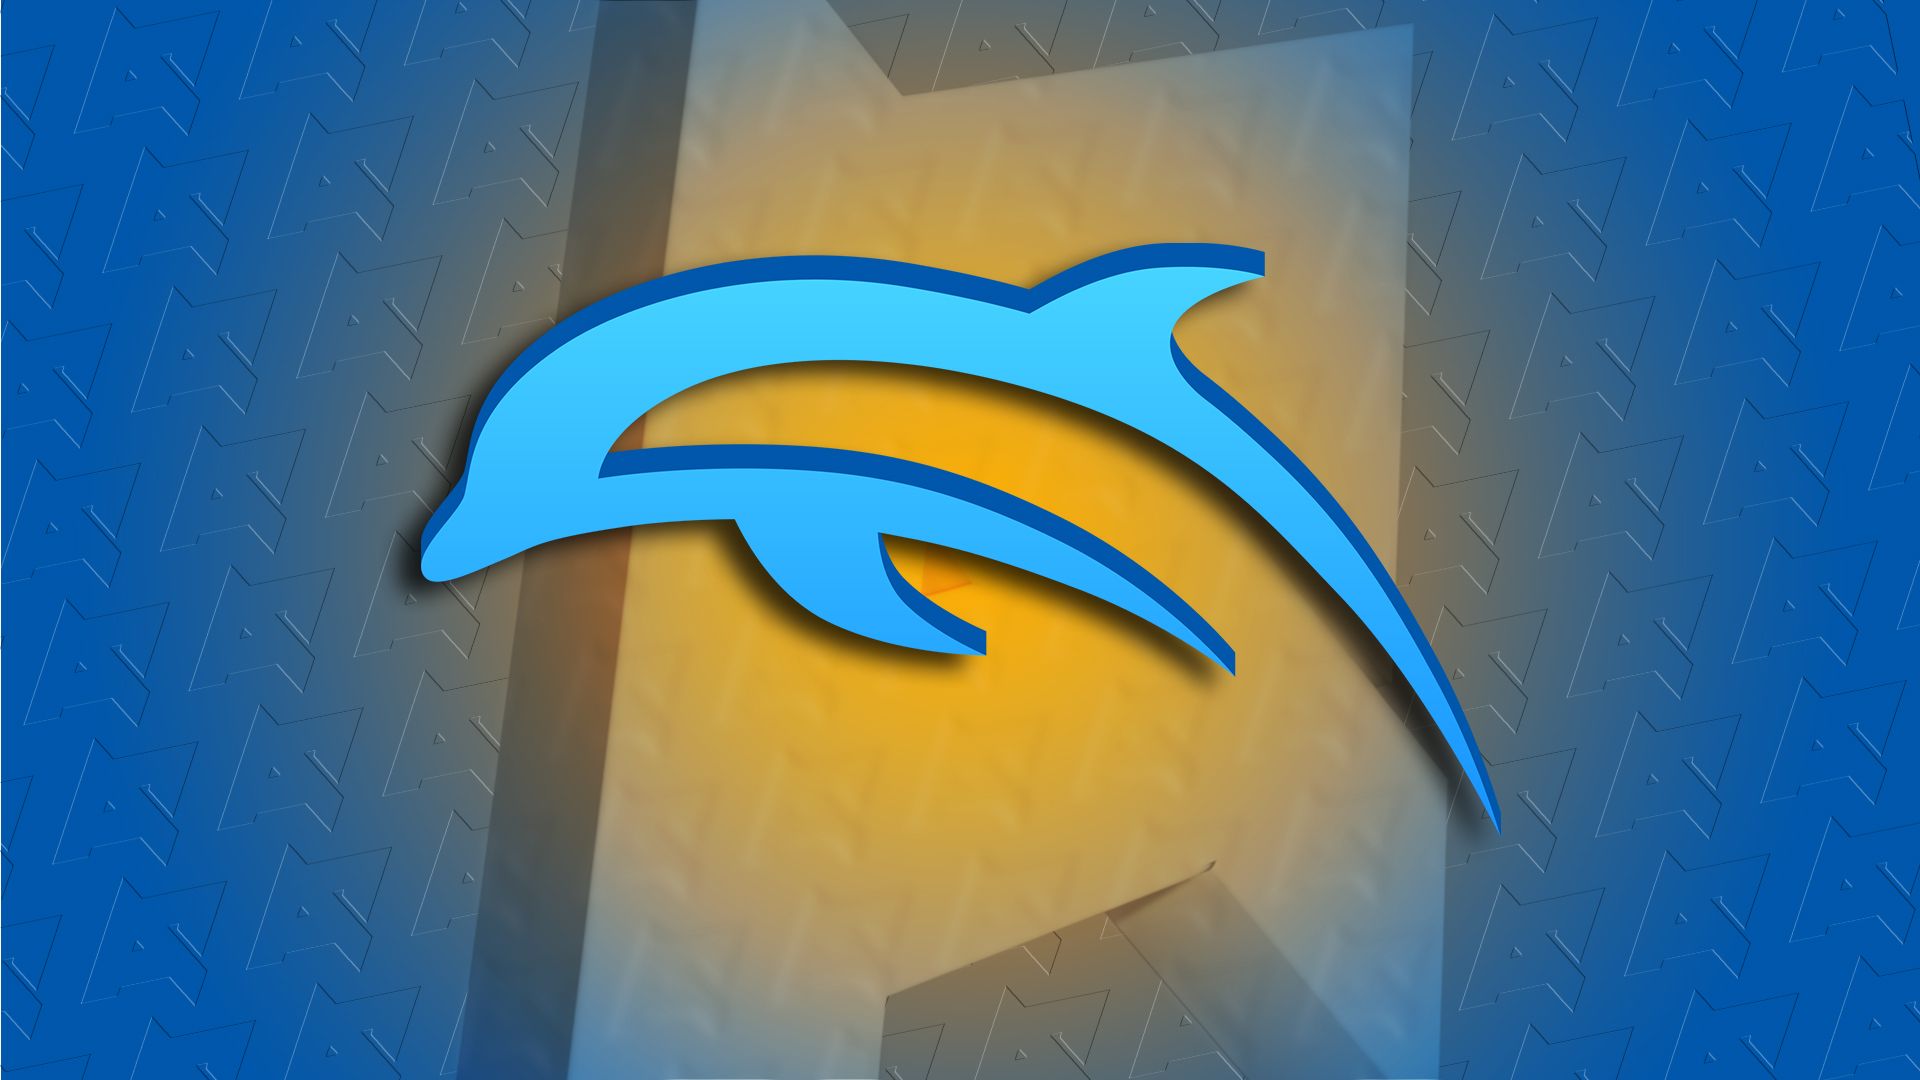 Dolphin Emulator logo imposed over AP logos